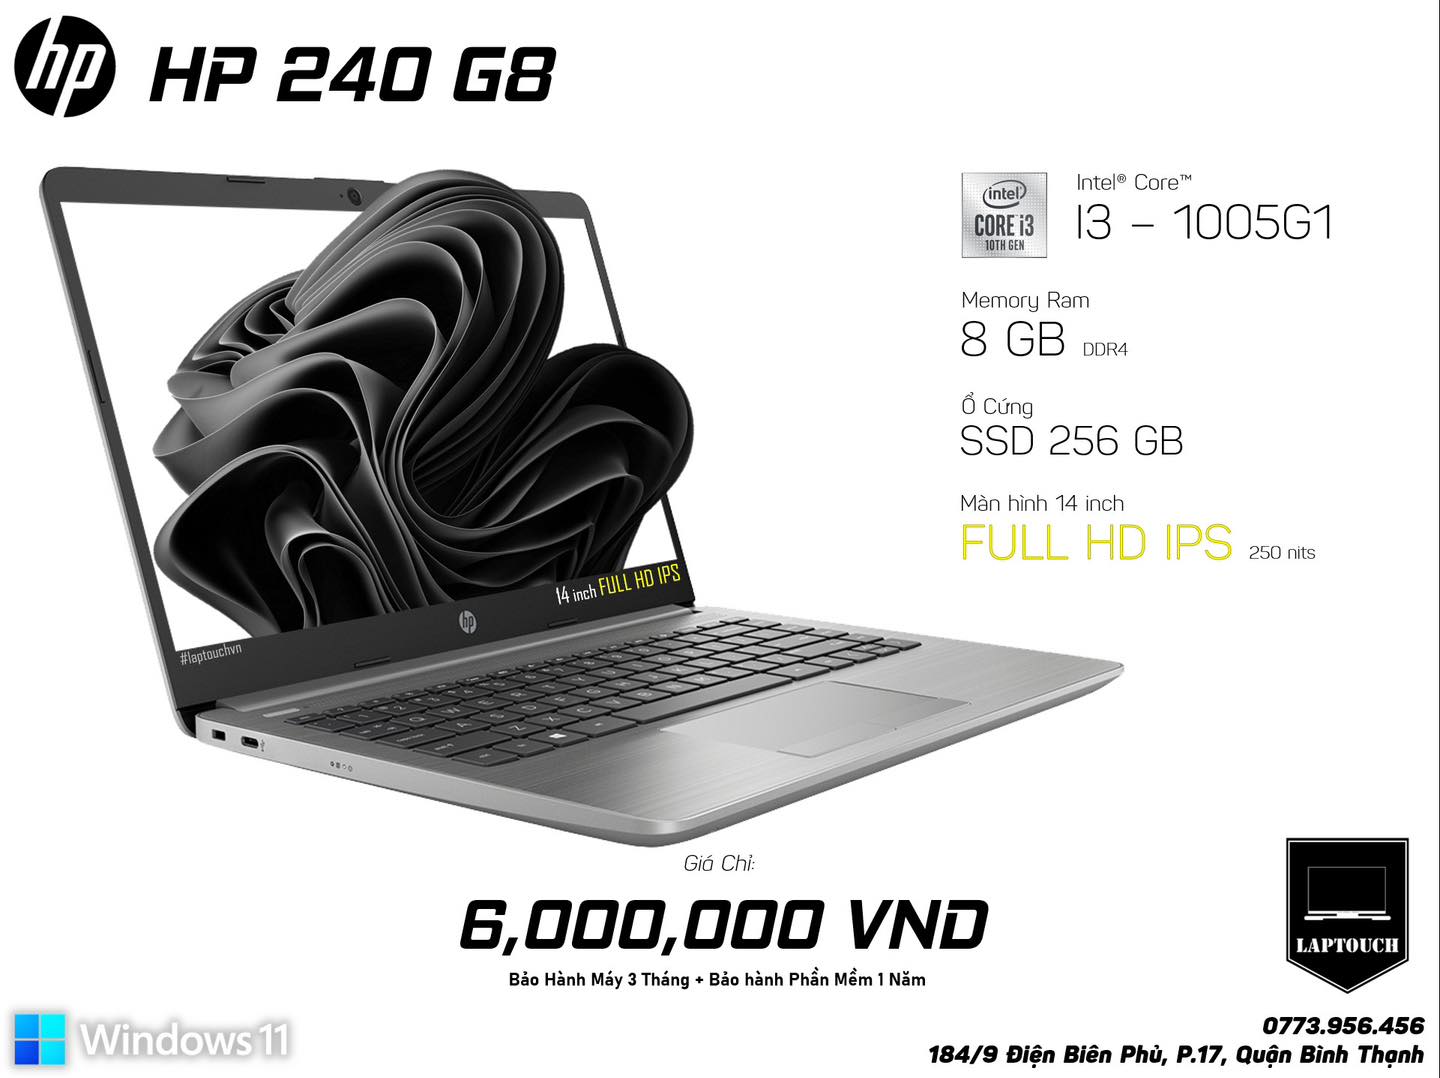 HP 240 G8